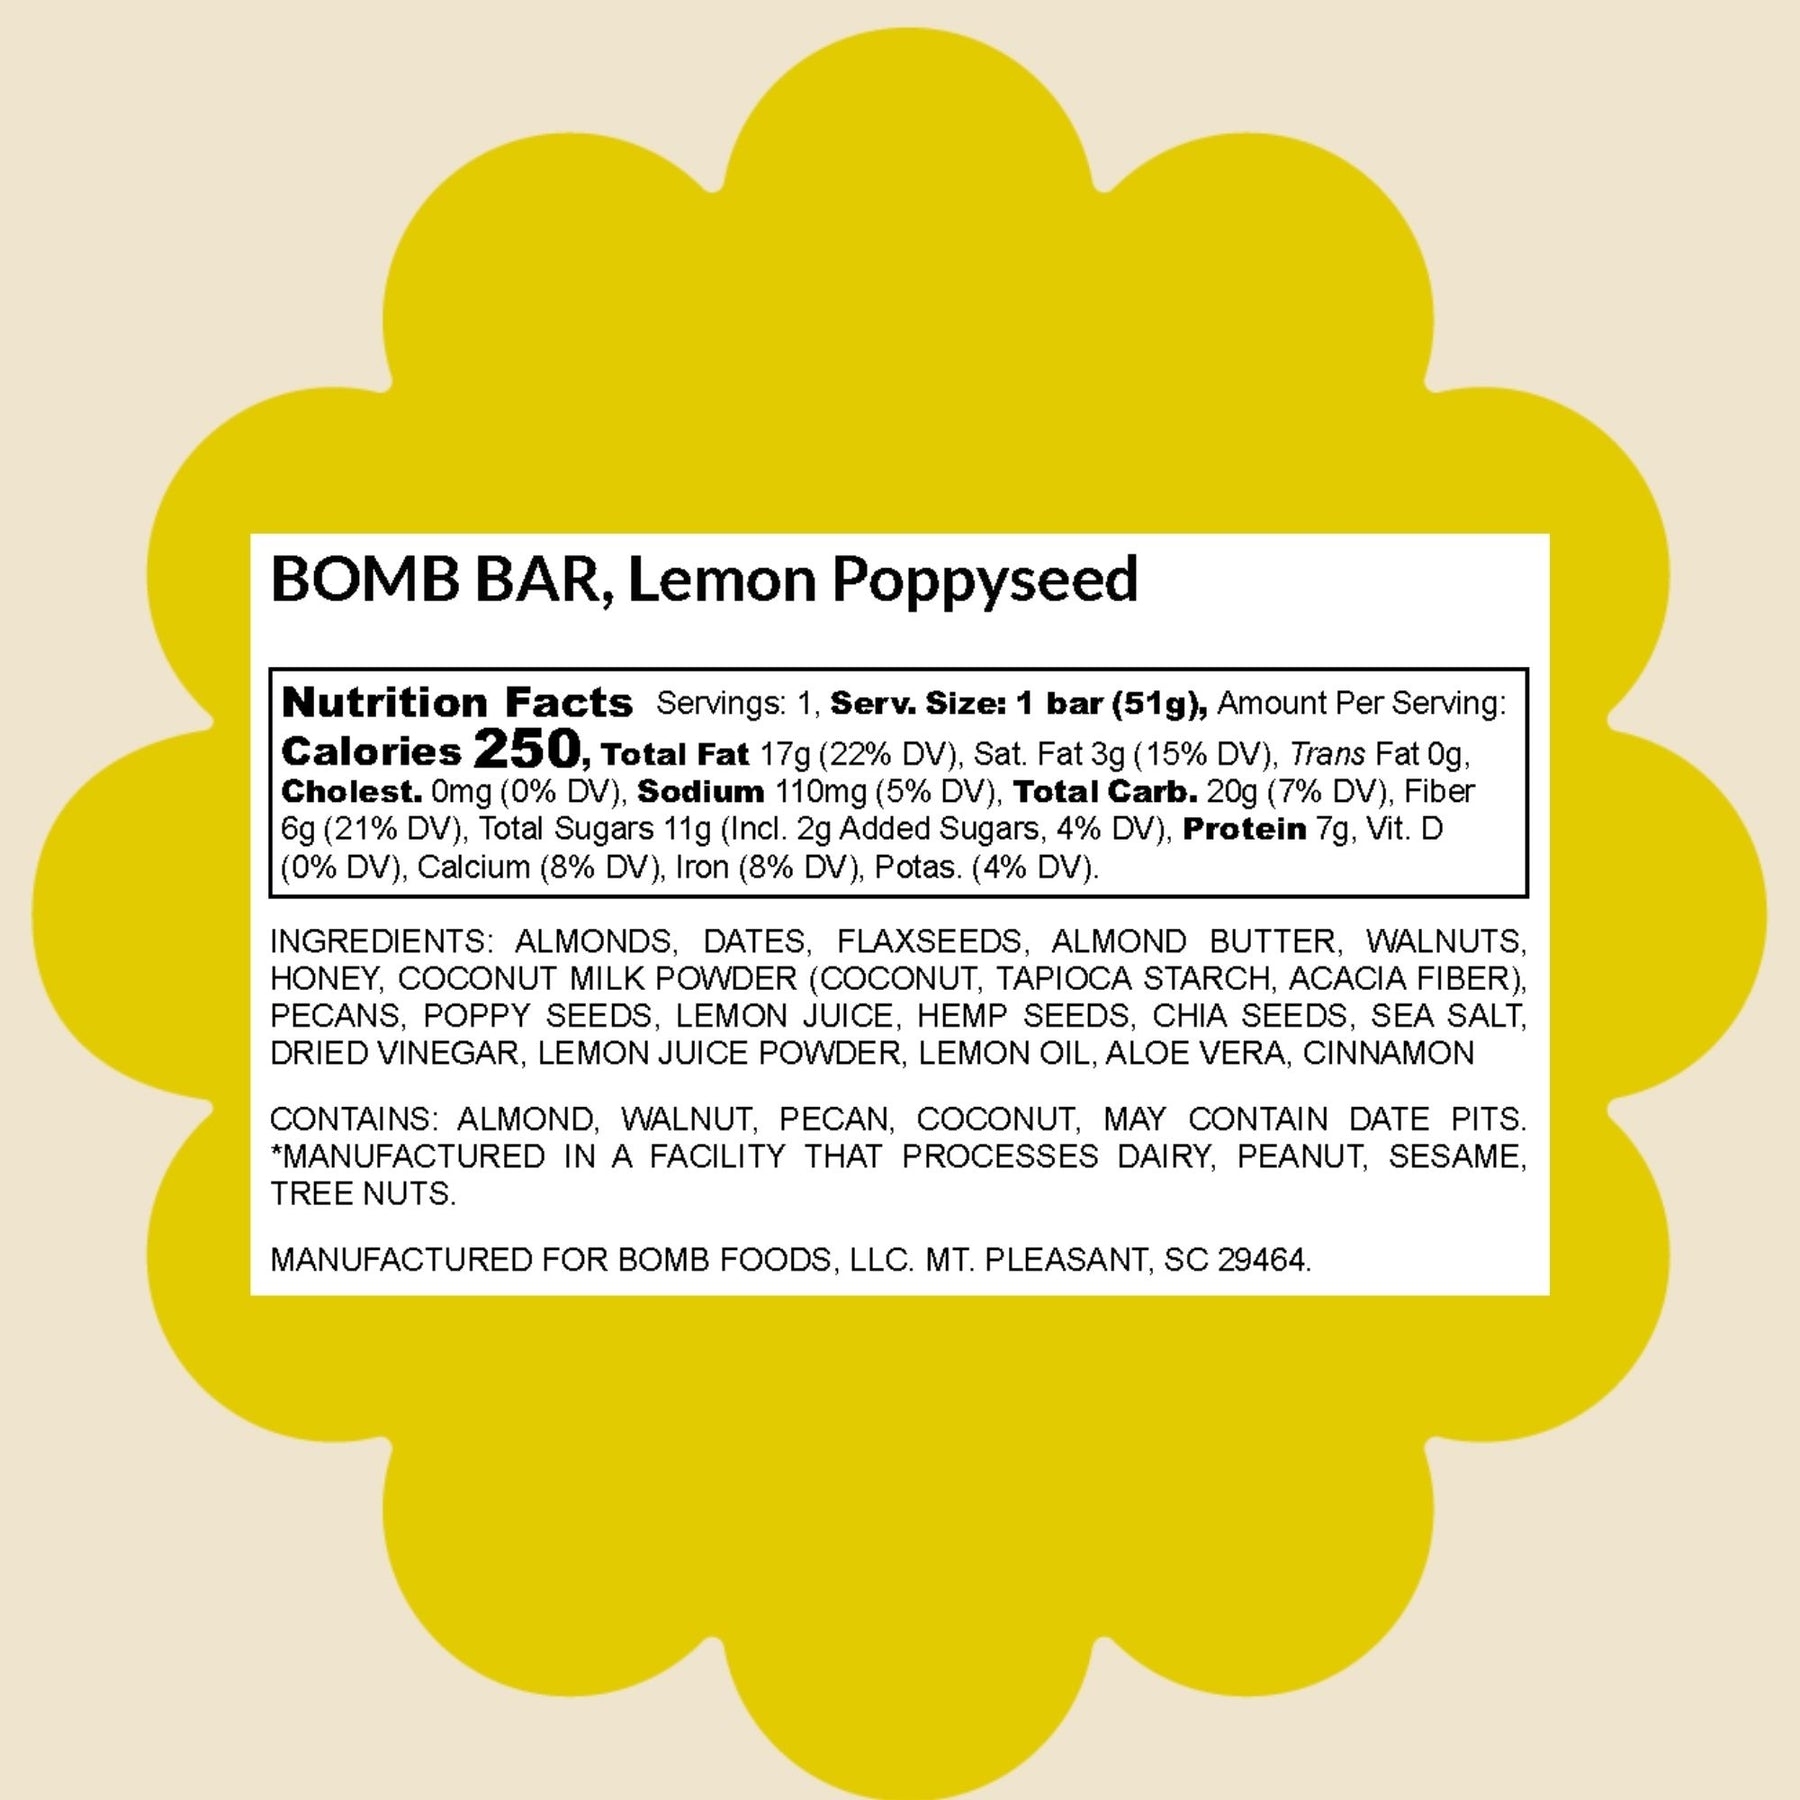 Lemon Poppyseed Bomb Bar